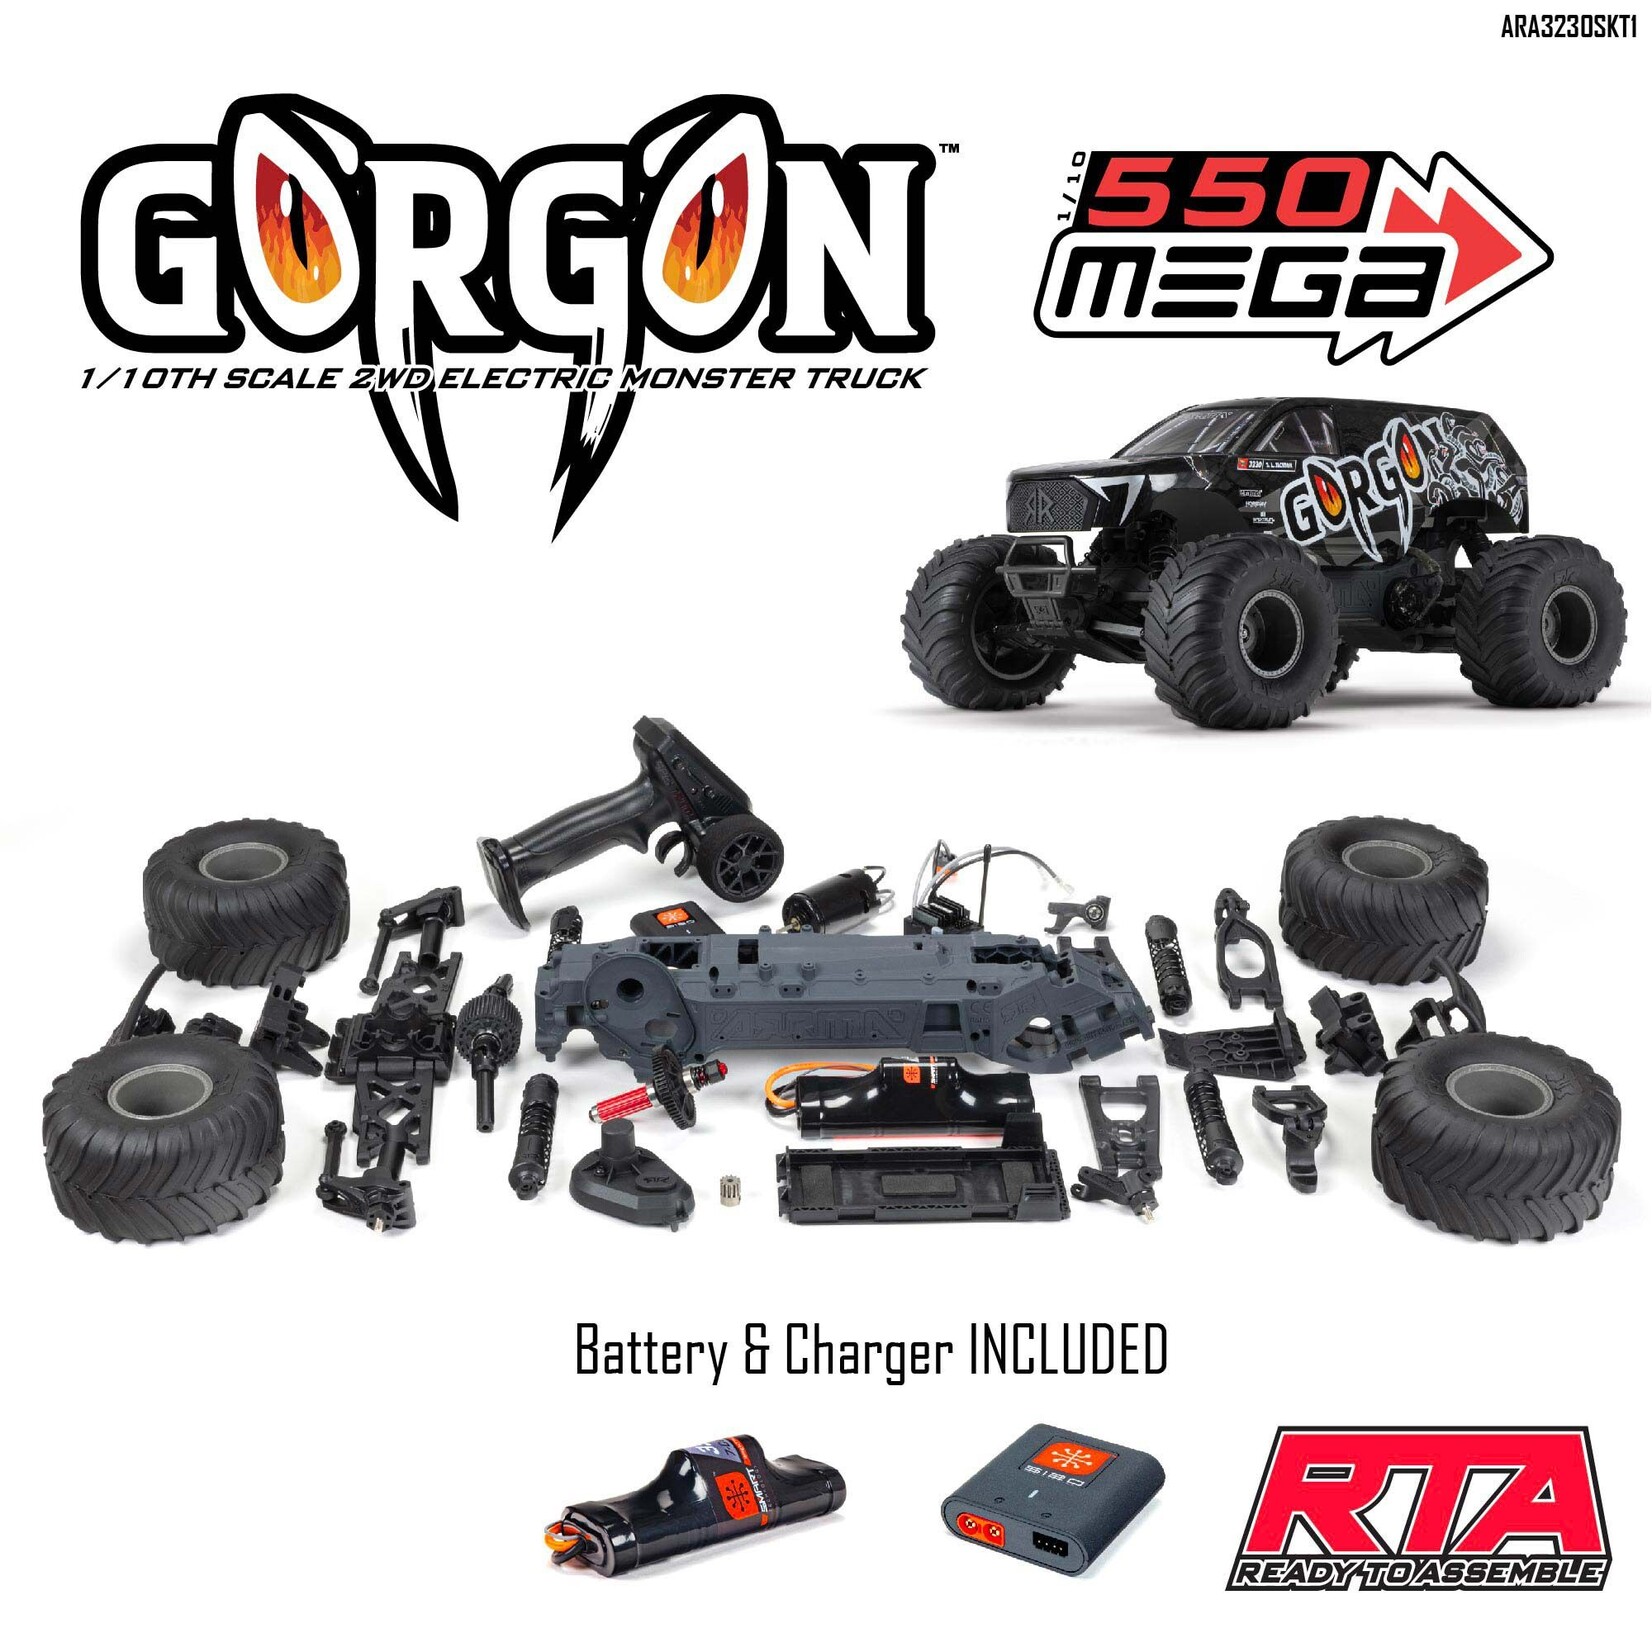 ARRMA Arrma Gorgon 4X2 MEGA 550 Brushed 1/10 Monster Truck Ready-To-Assemble Kit w/SLT2 2.4GHz Radio, Battery & Charger #ARA3230SKT1